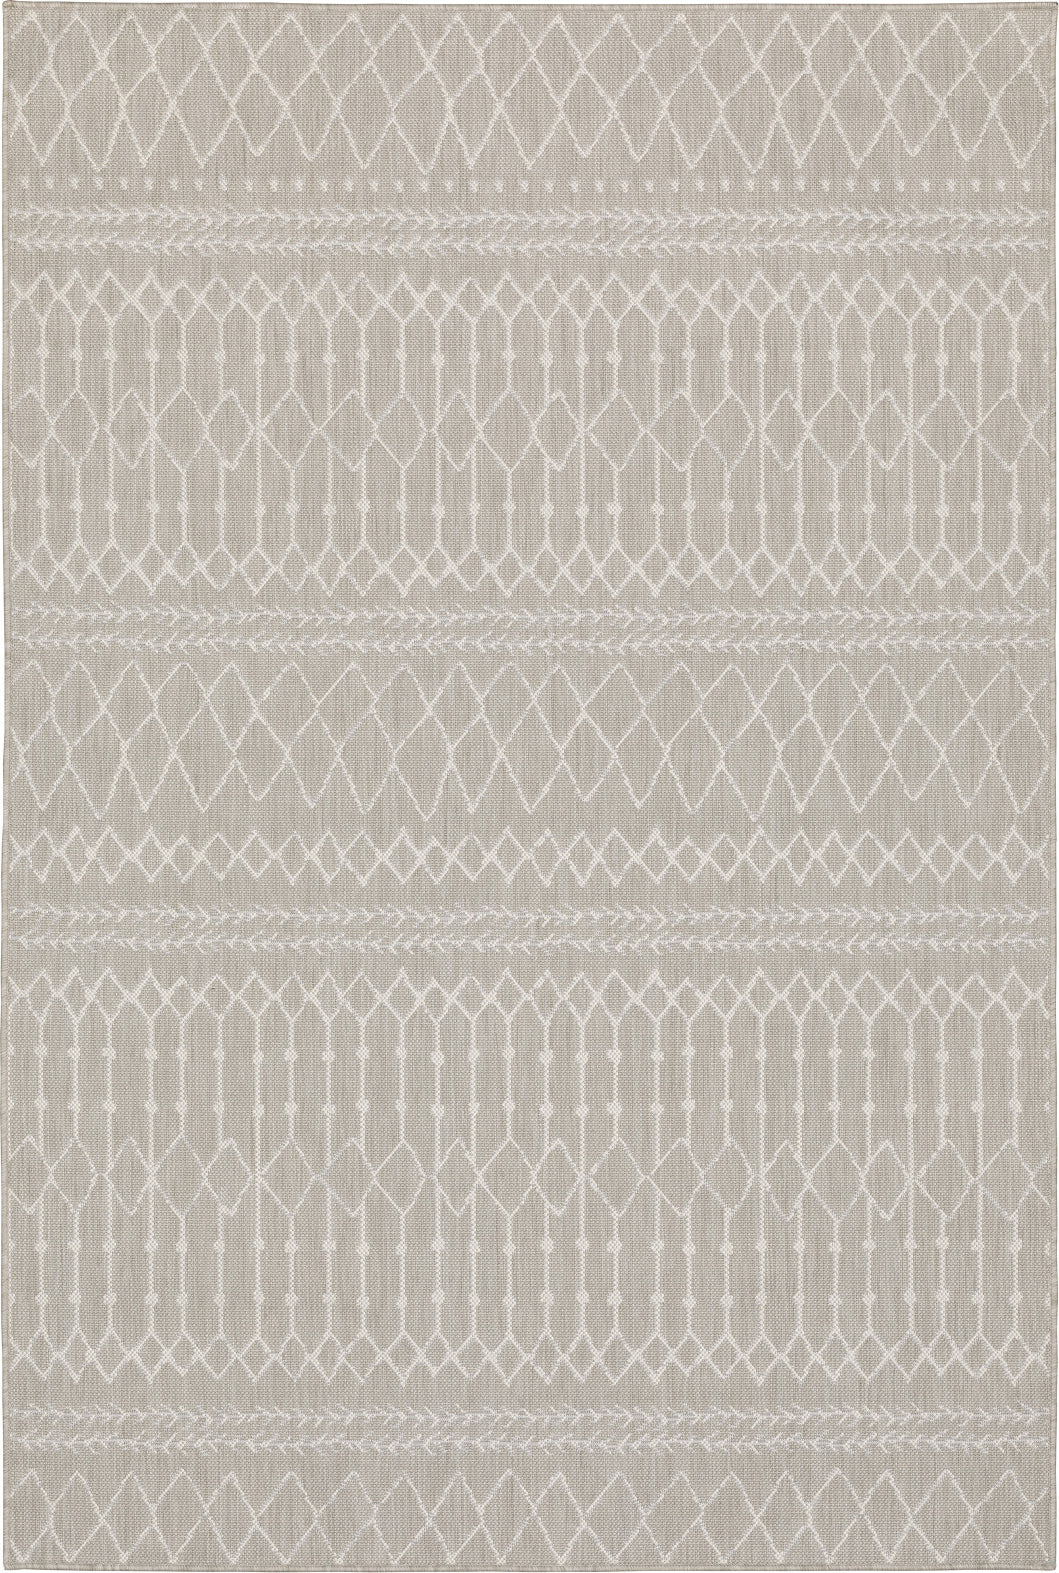 Oriental Weavers Portofino 670H4 Grey/Ivory Area Rug main image featured